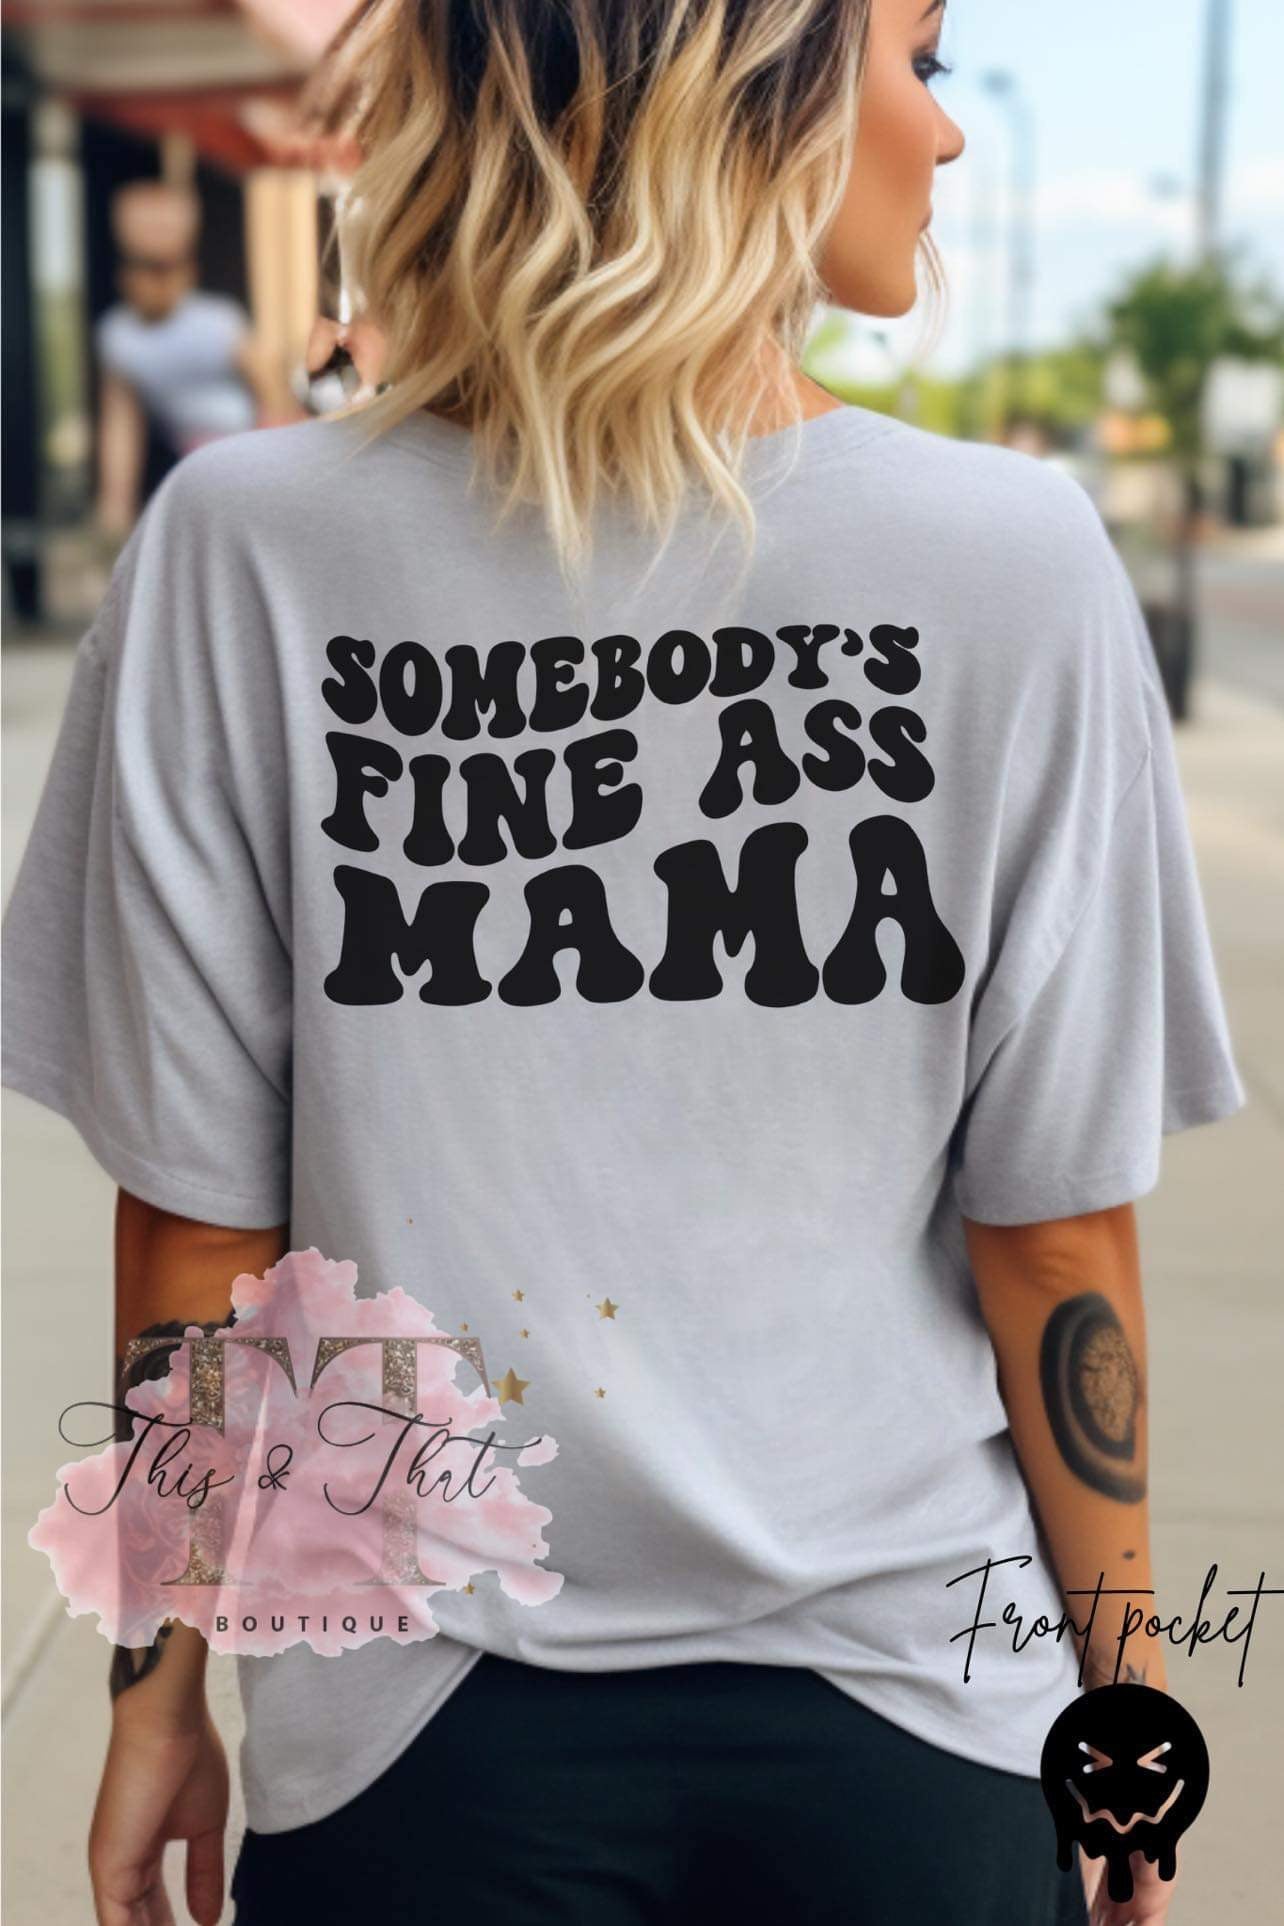 Somebody's Fine A** Mama